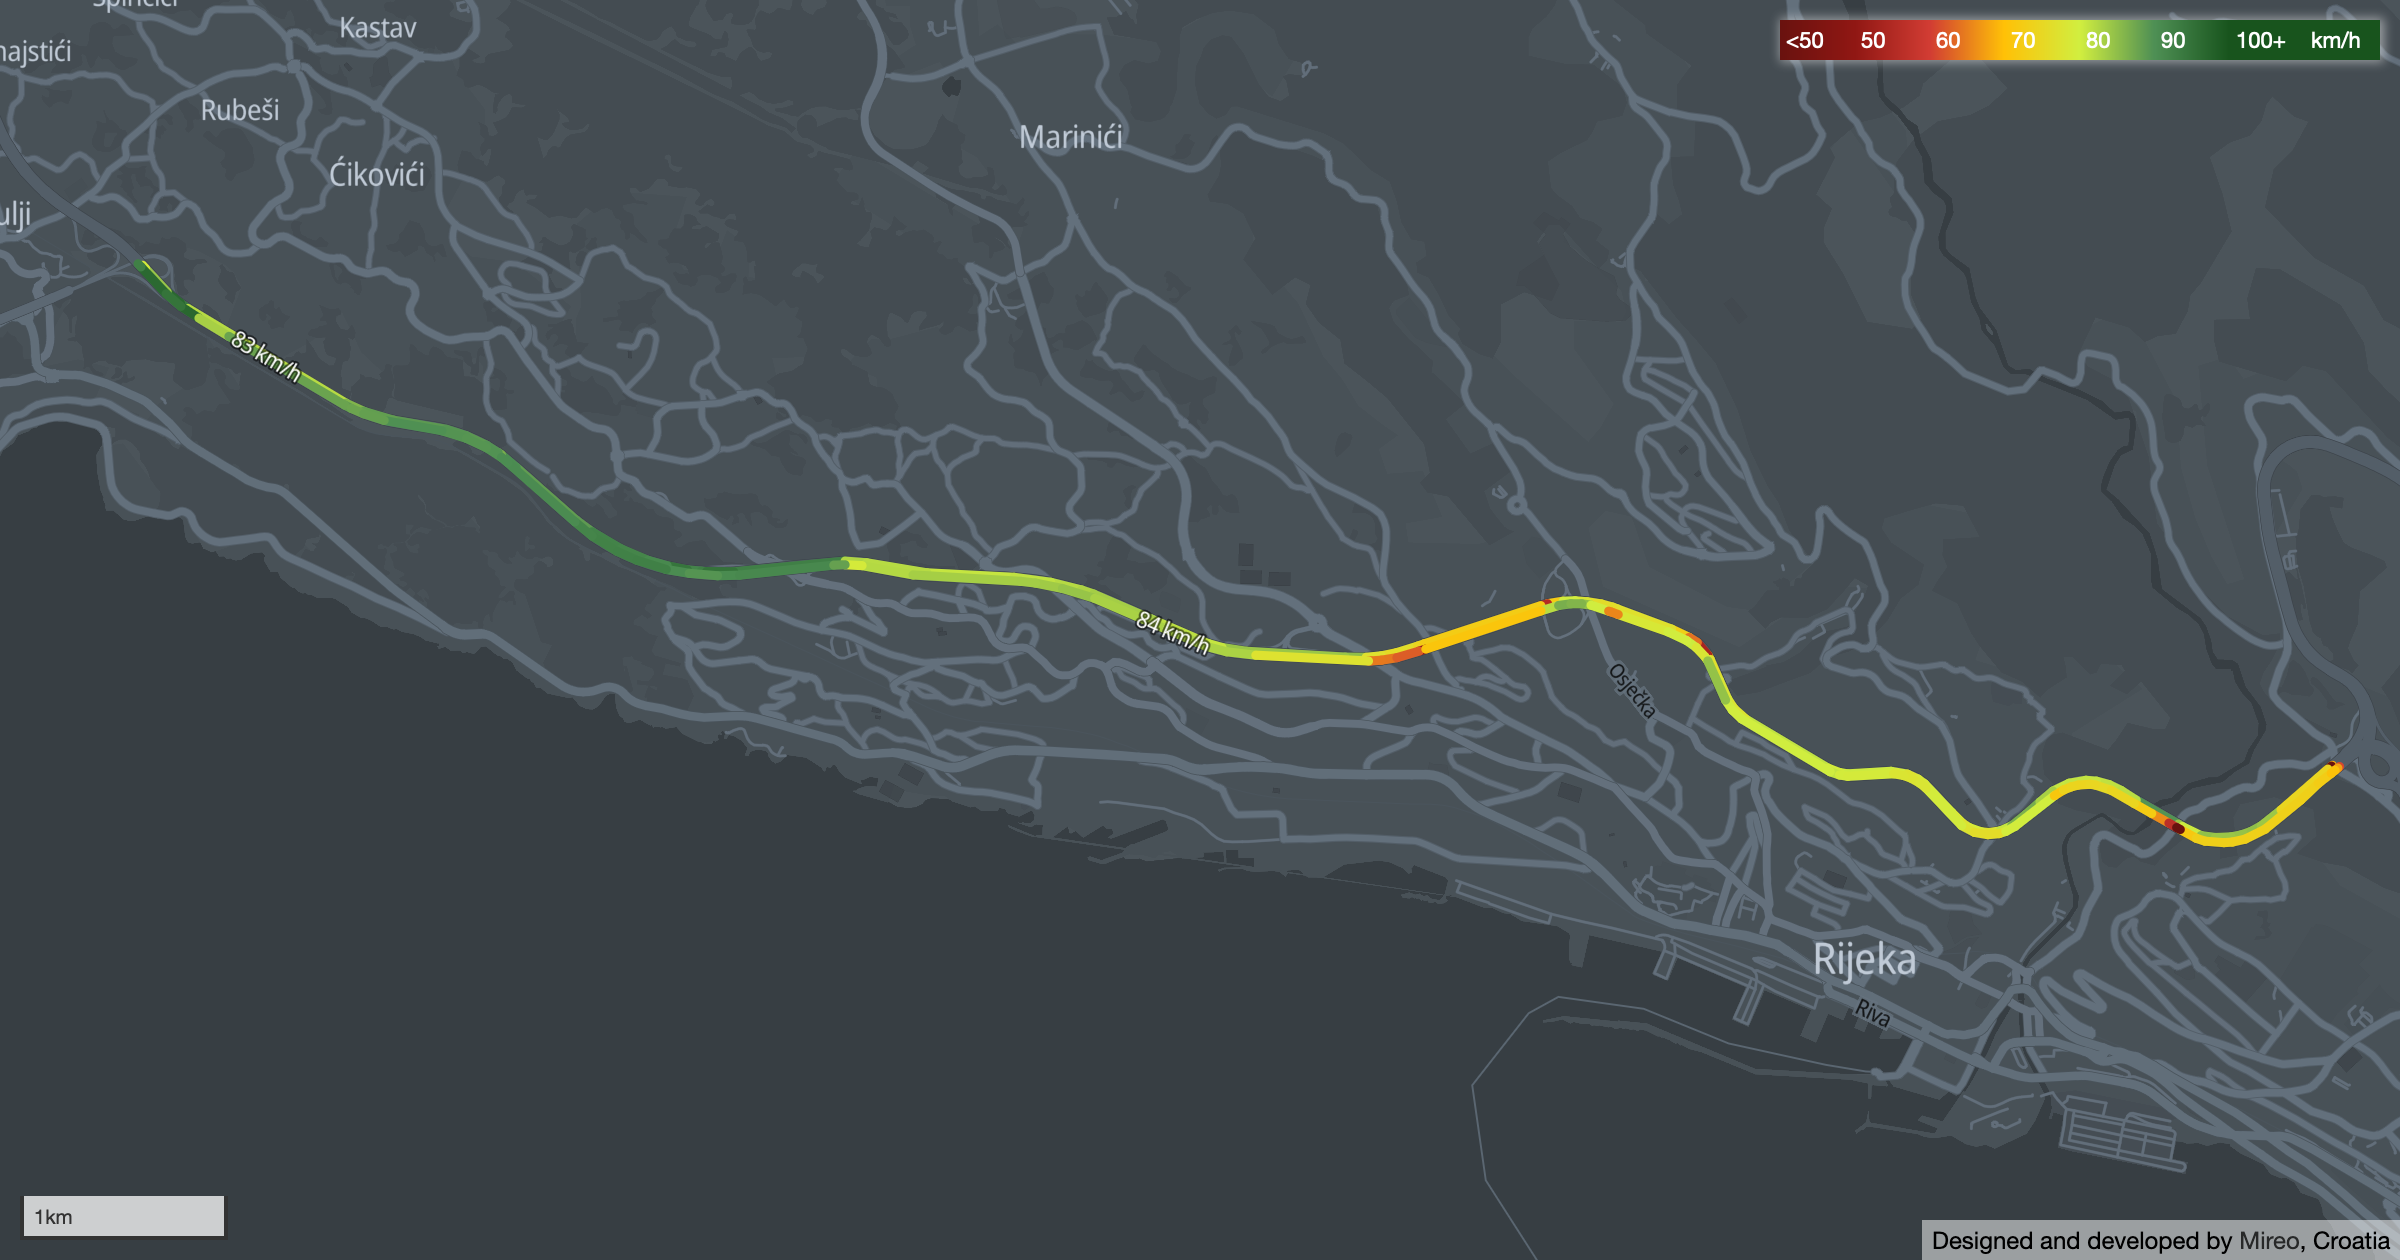 Measuring real-world average travel speed on Rijeka bypass